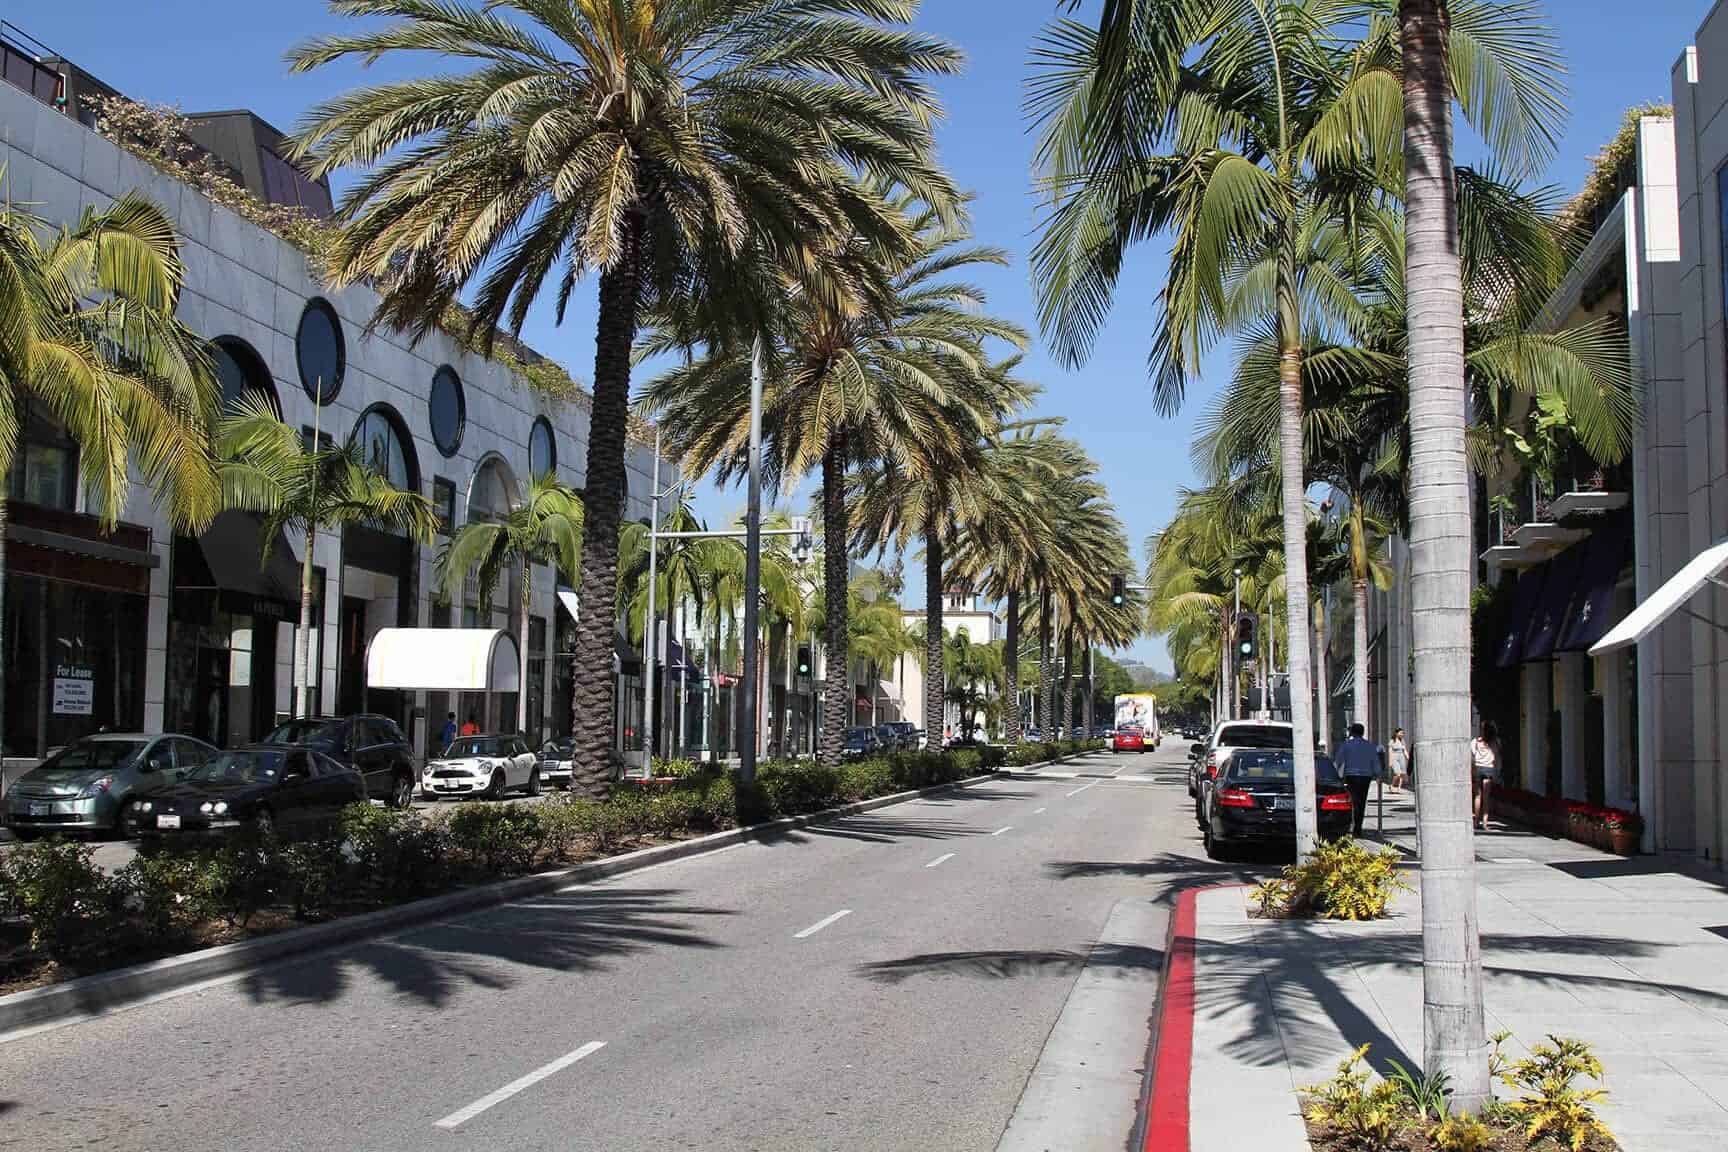 la palm trees street